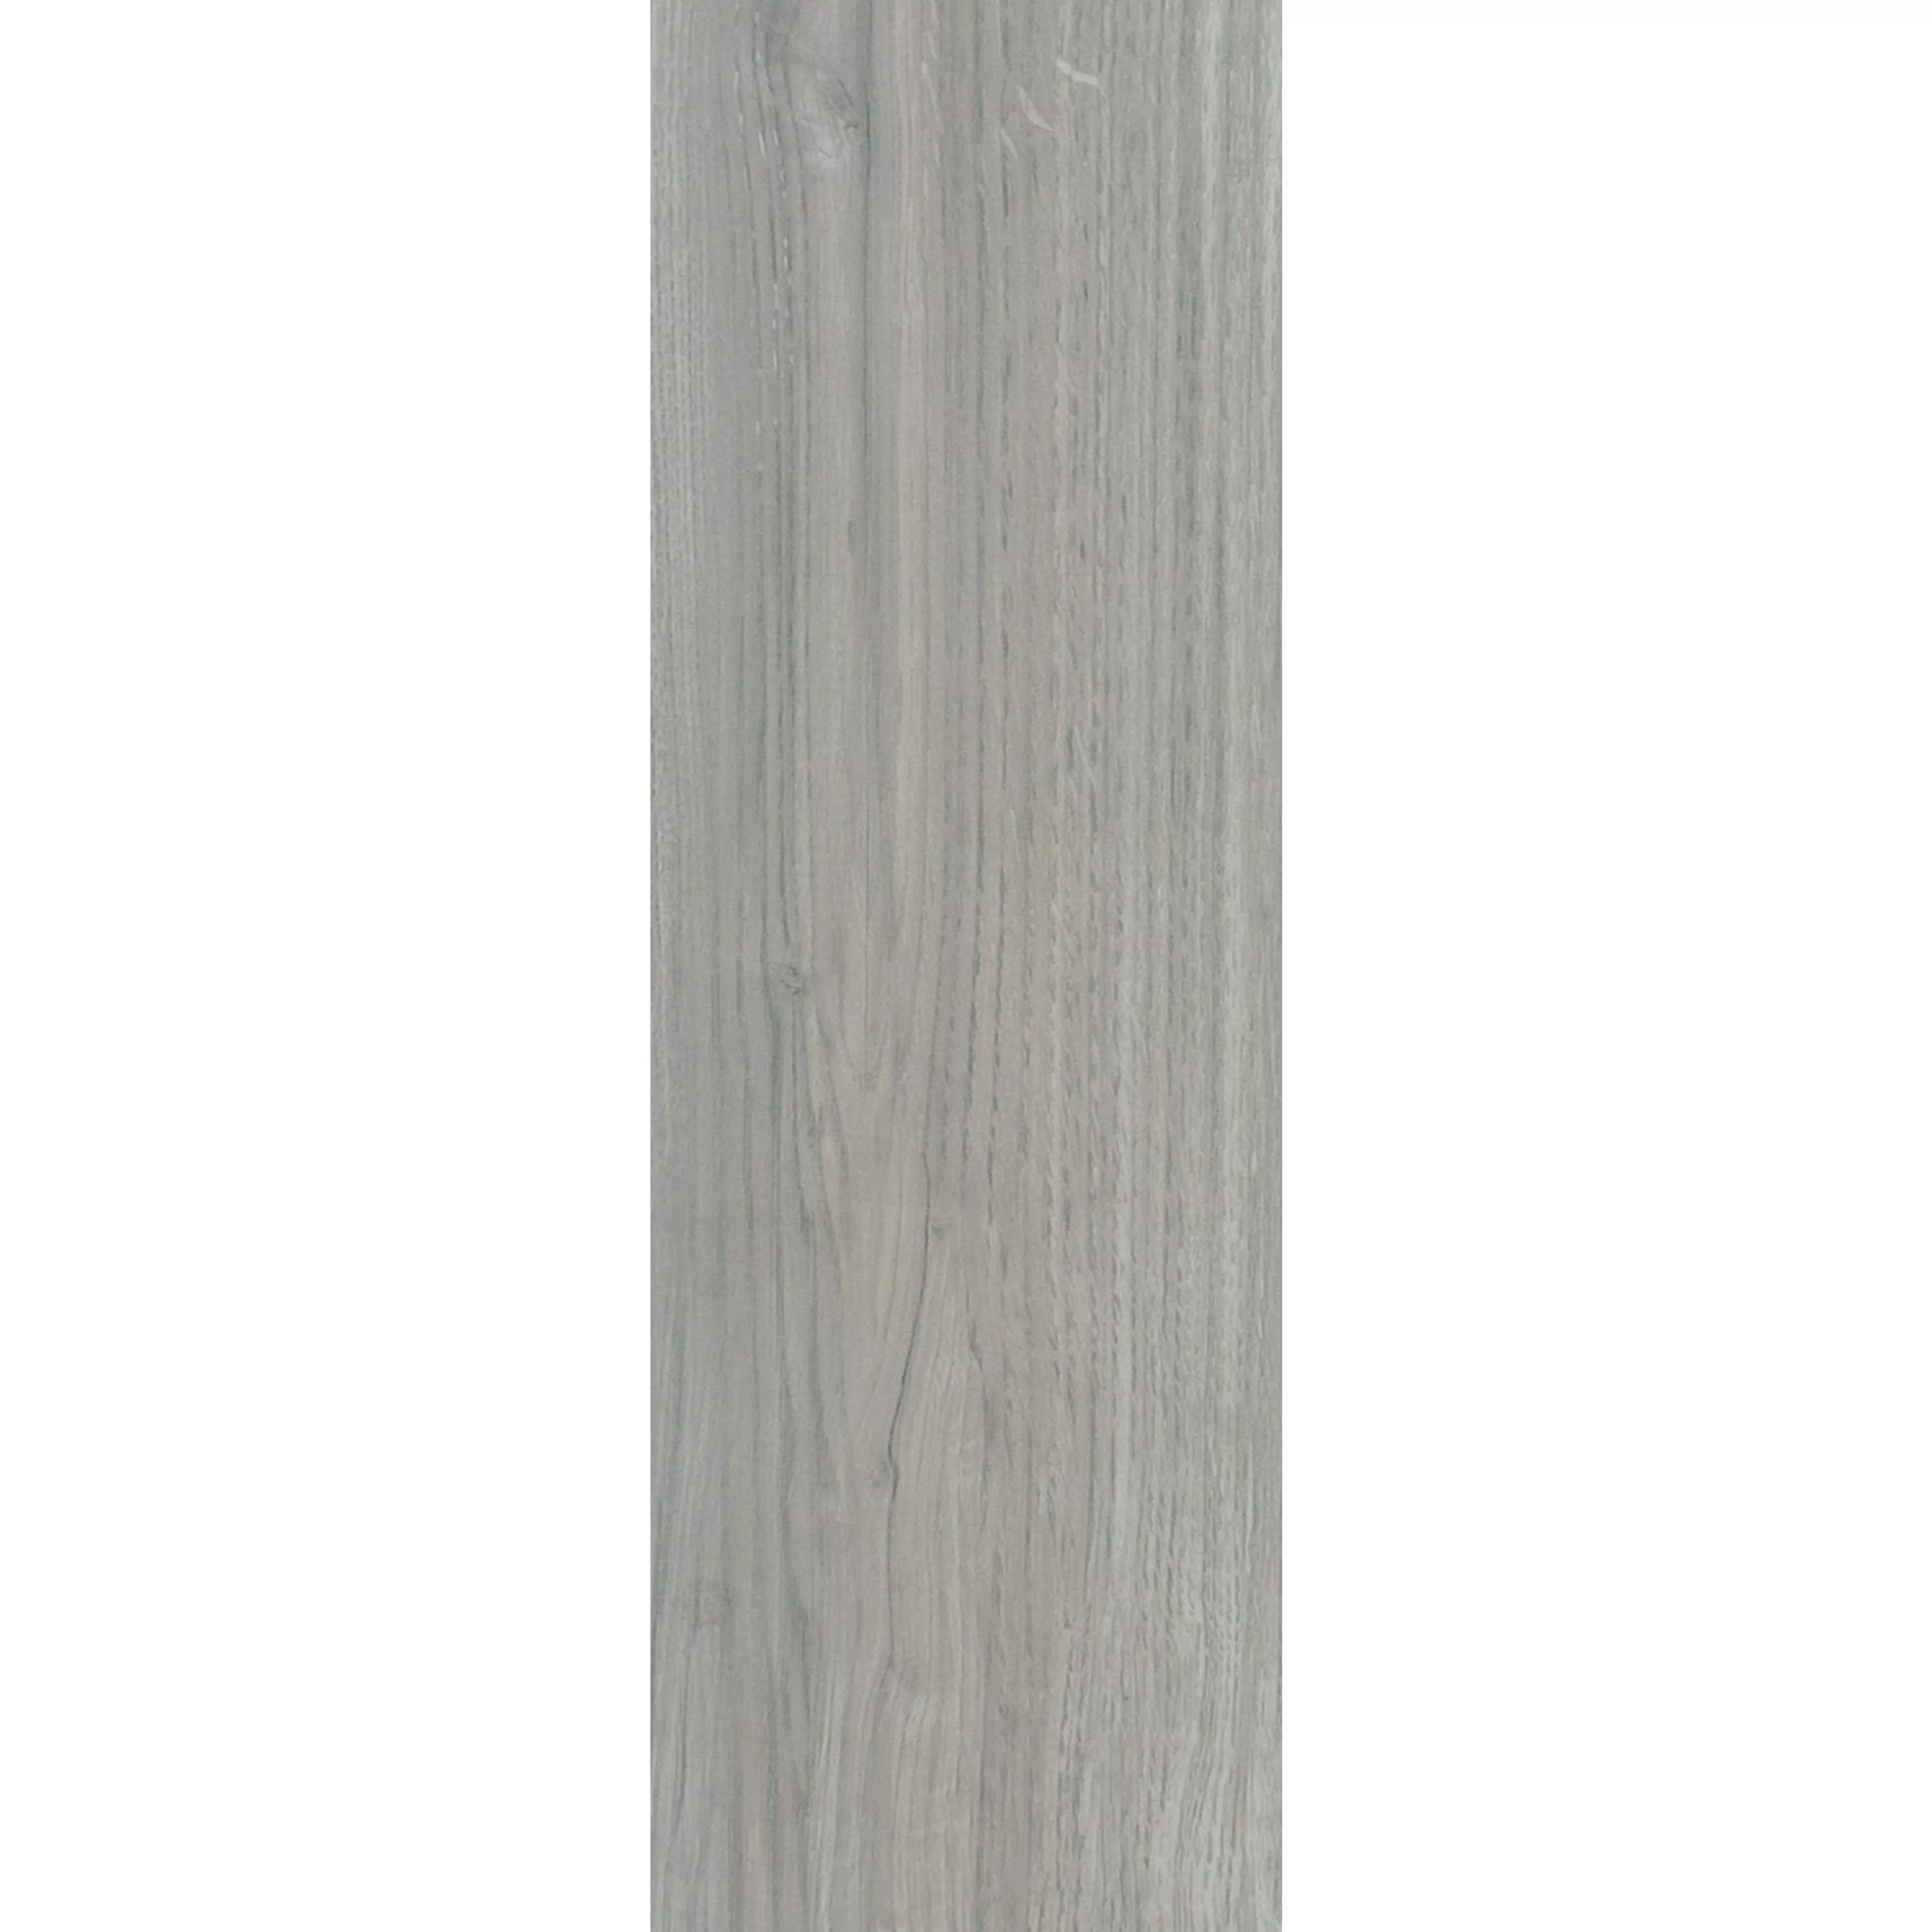 Ladrilhos Aparência de Madeira Fullwood Bege 20x120cm 